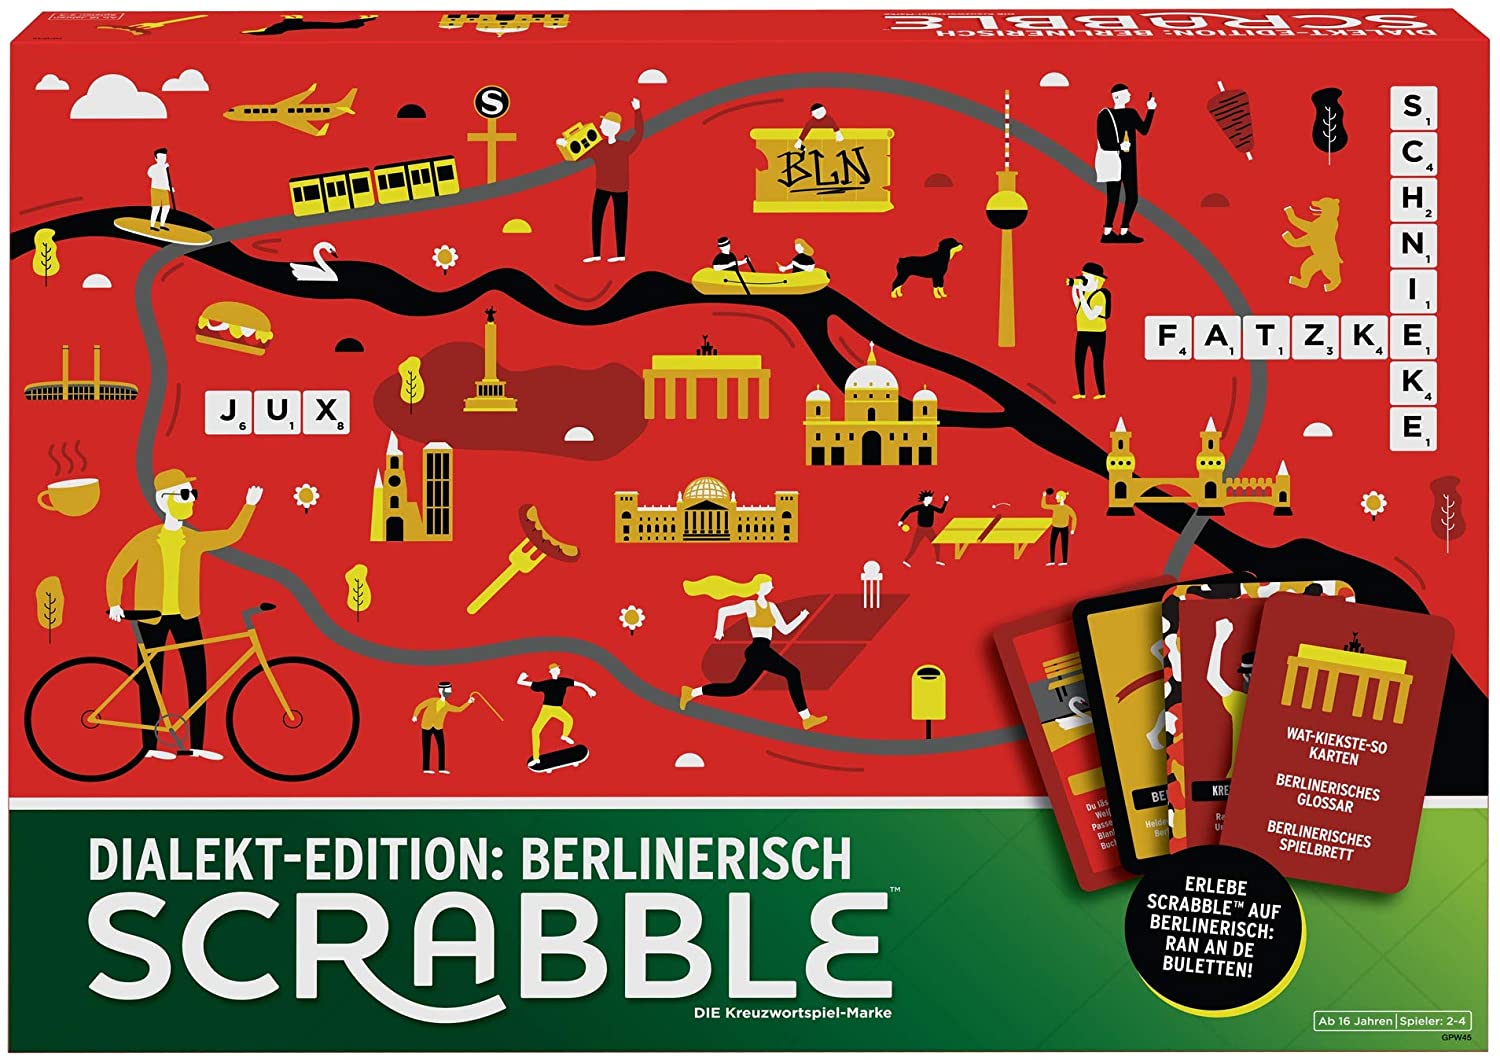 Scrabble - Dialekt-Edition: Berlinerisch